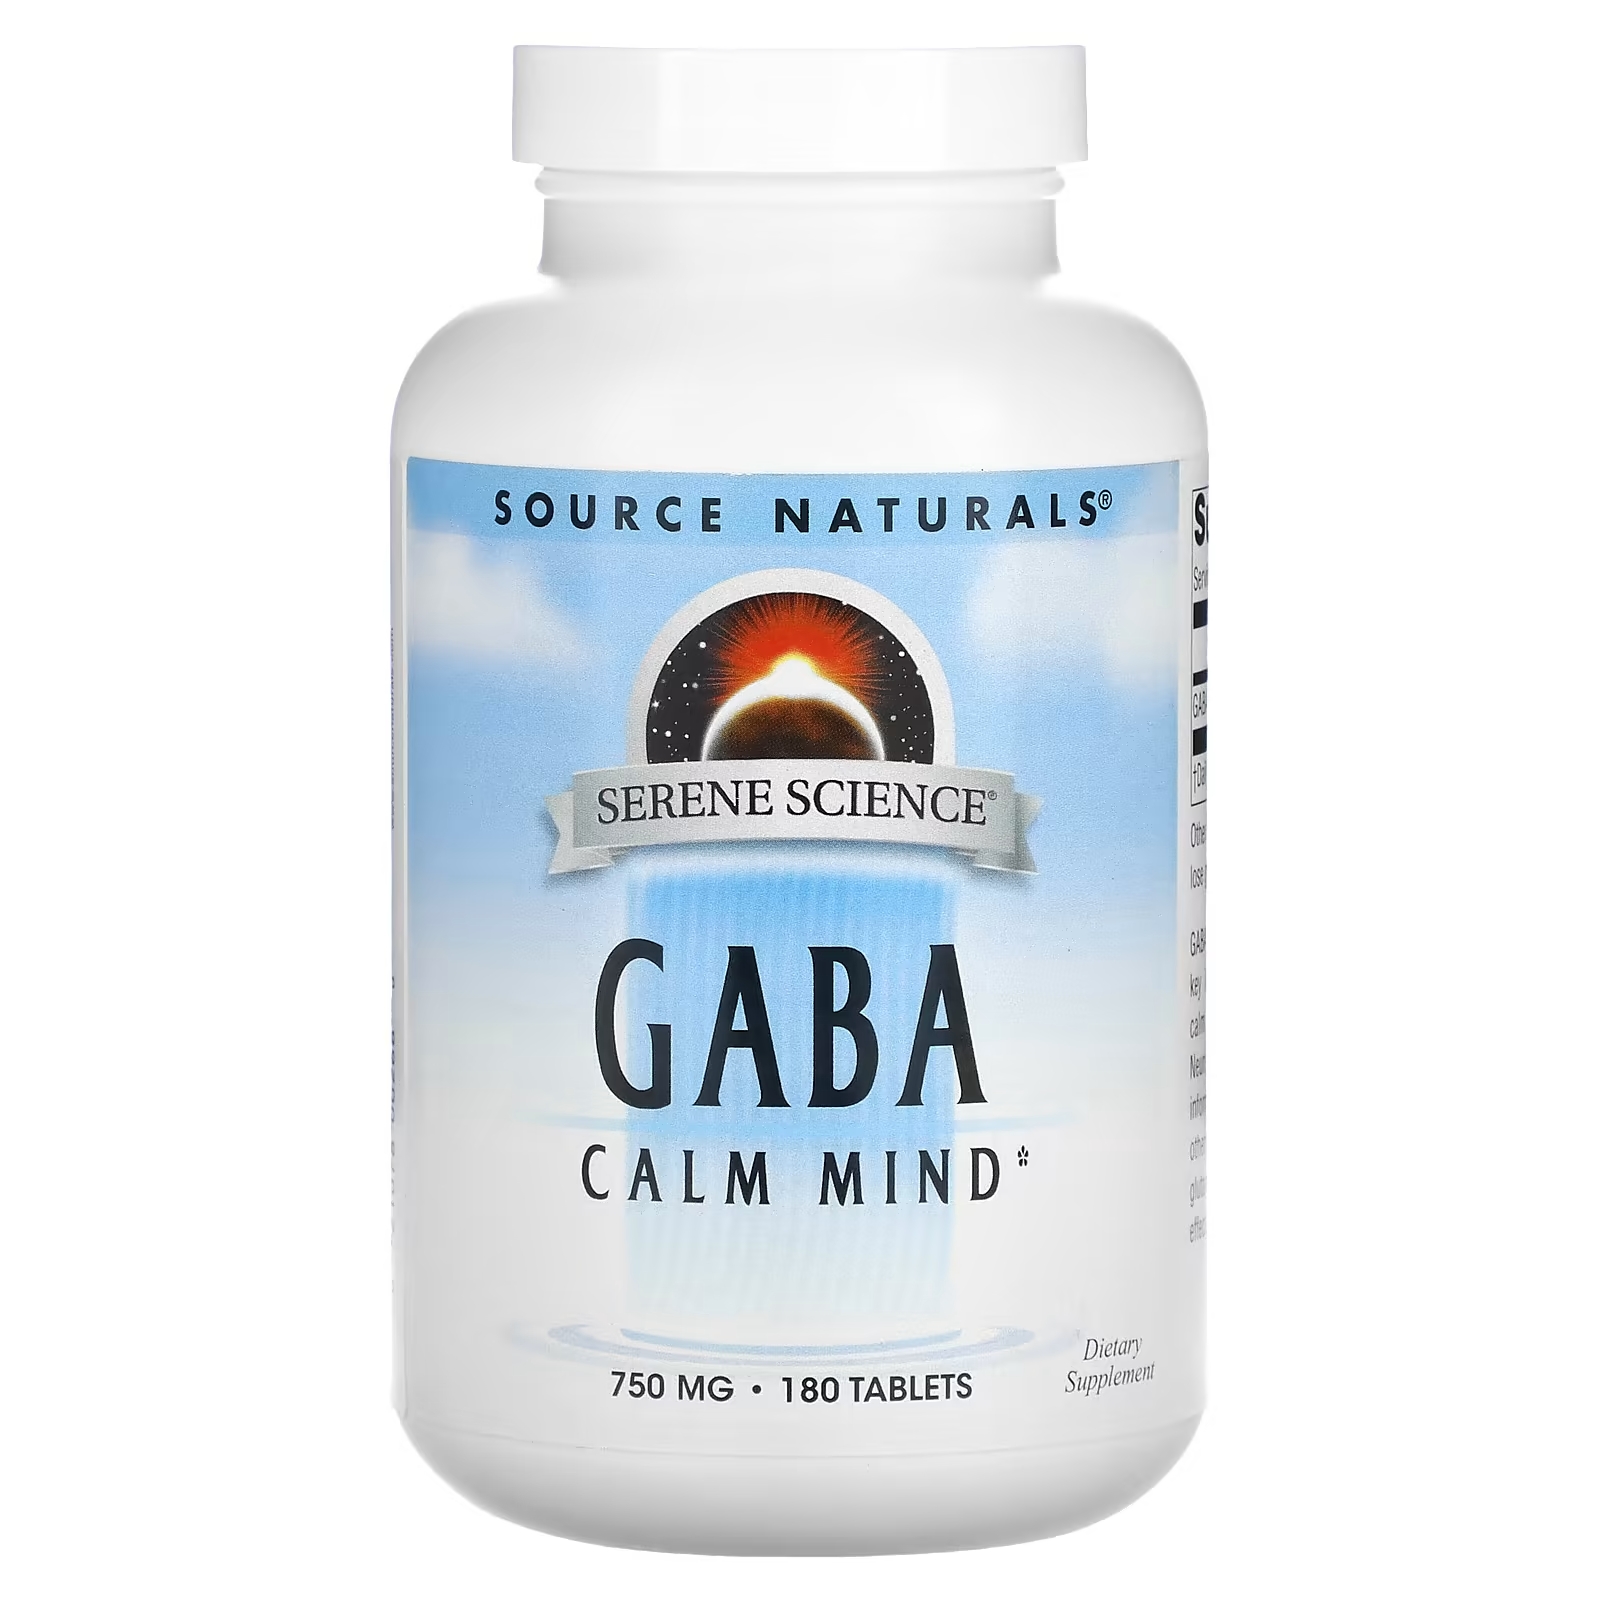 Source Naturals GABA Calm Mind ГАМК 750 мг, 180 таблеток source naturals gaba calm mind гамк 750 мг 180 таблеток